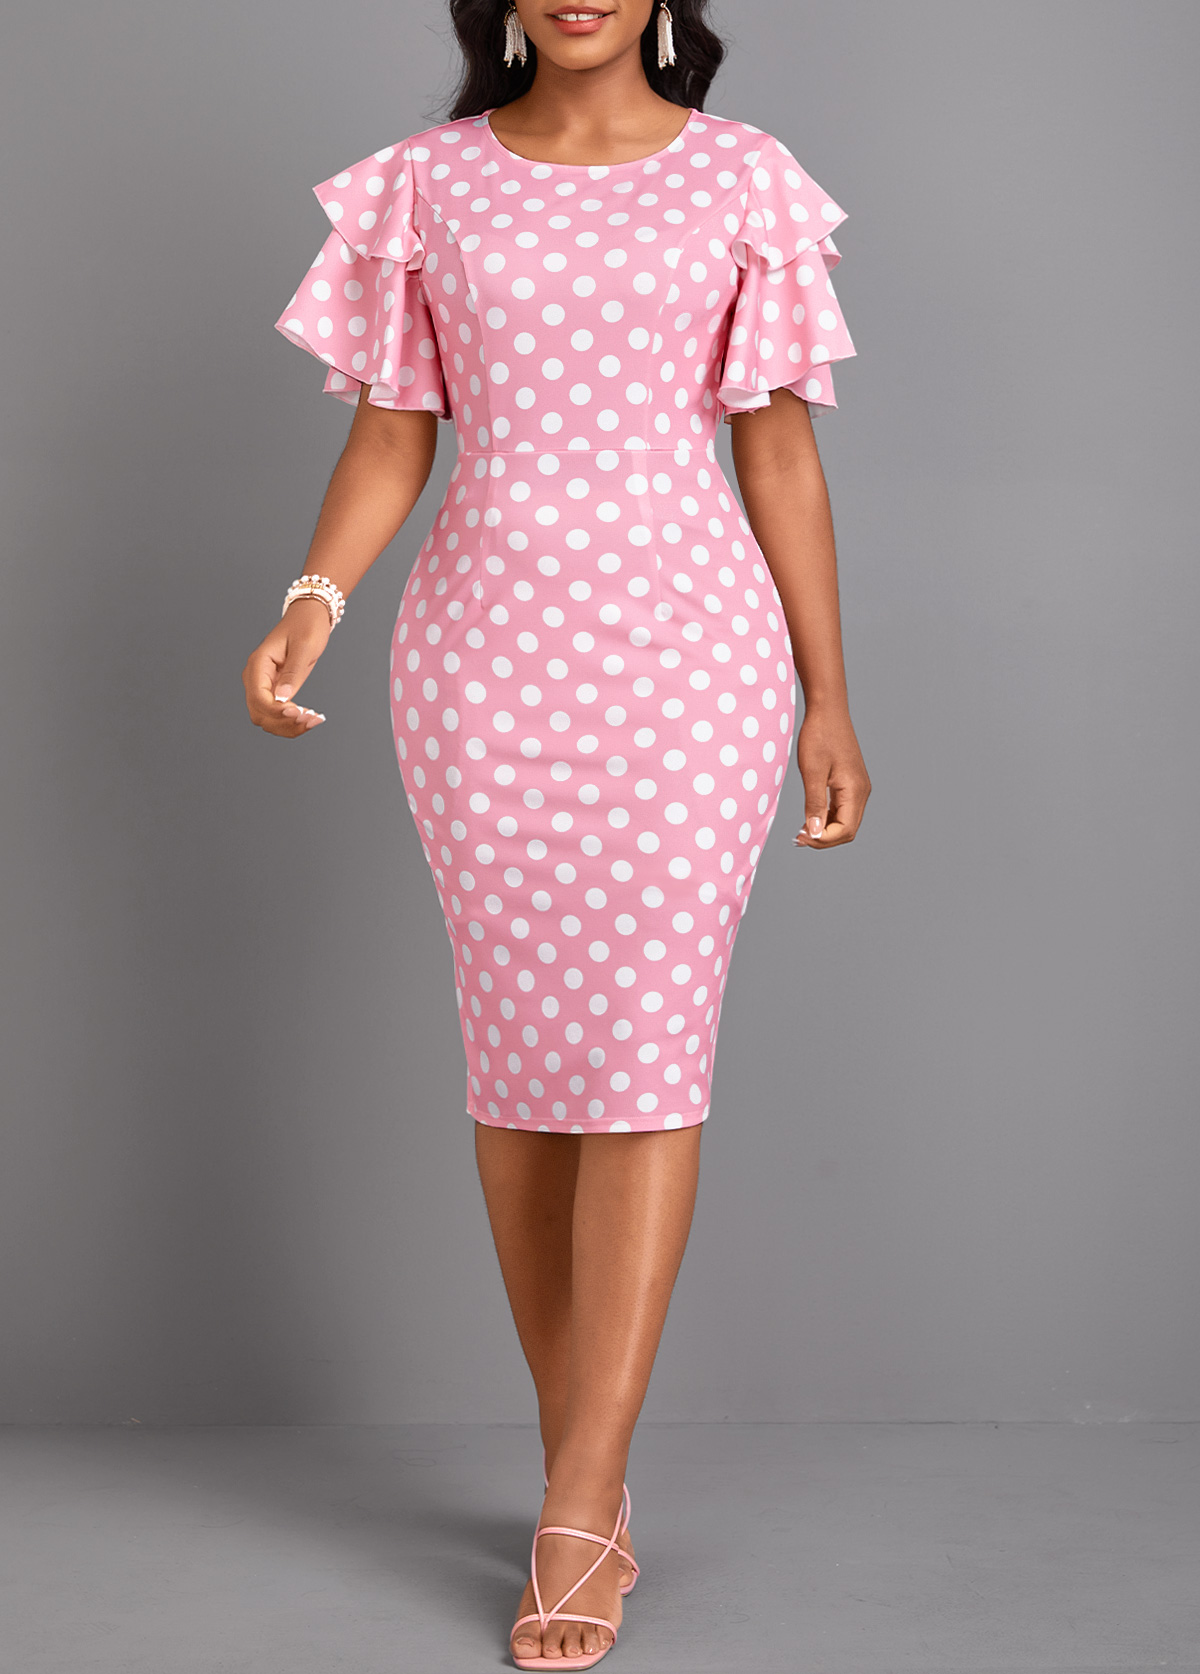 Polka Dot Layered Pink Short Sleeve Bodycon Dress